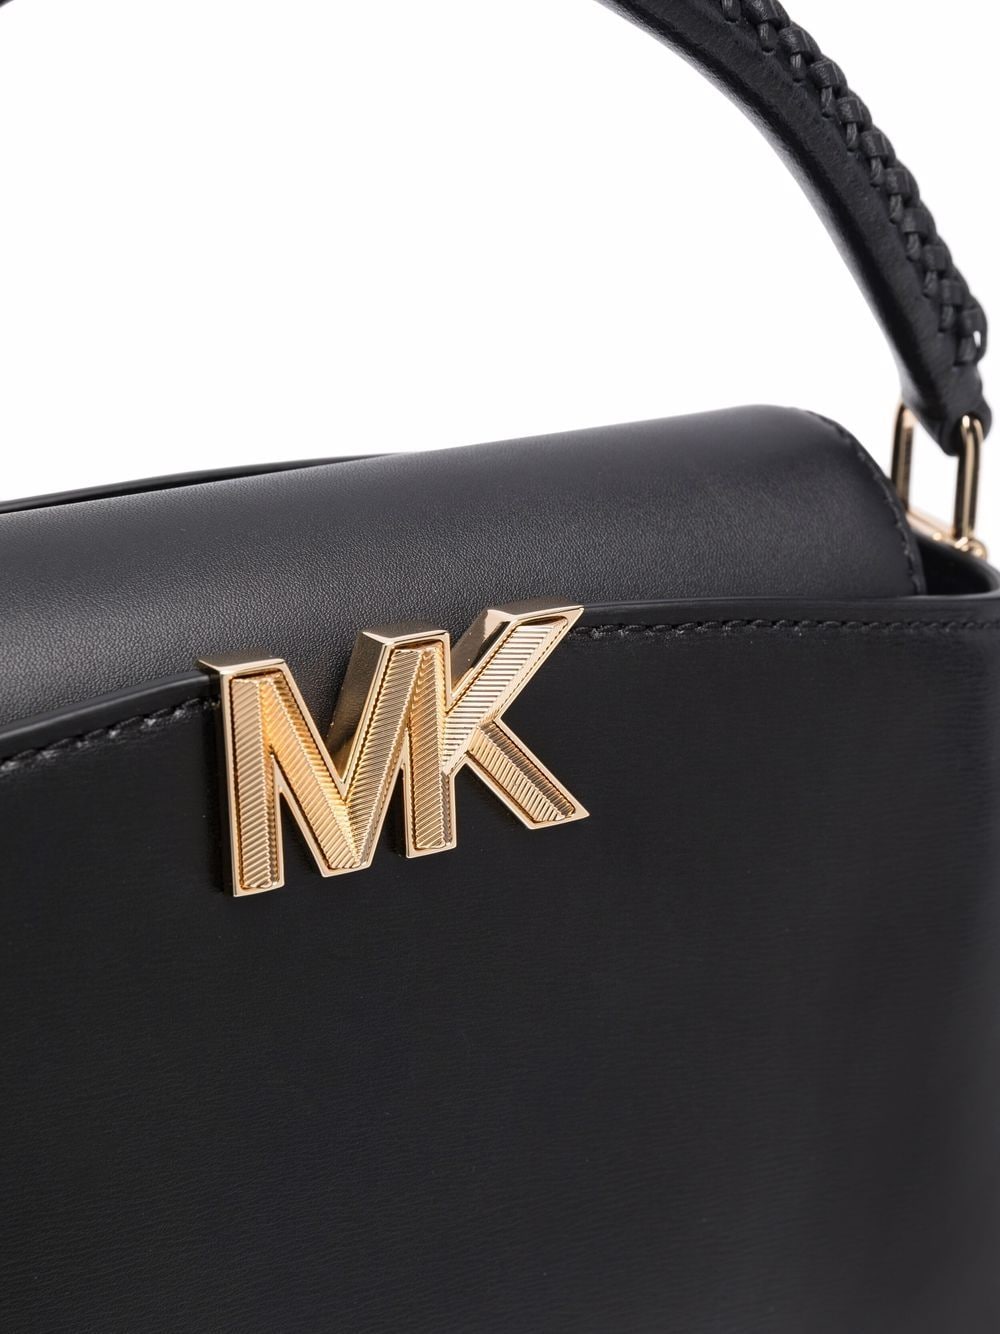 Karlie Small Studded Snake Embossed Leather Crossbody Bag